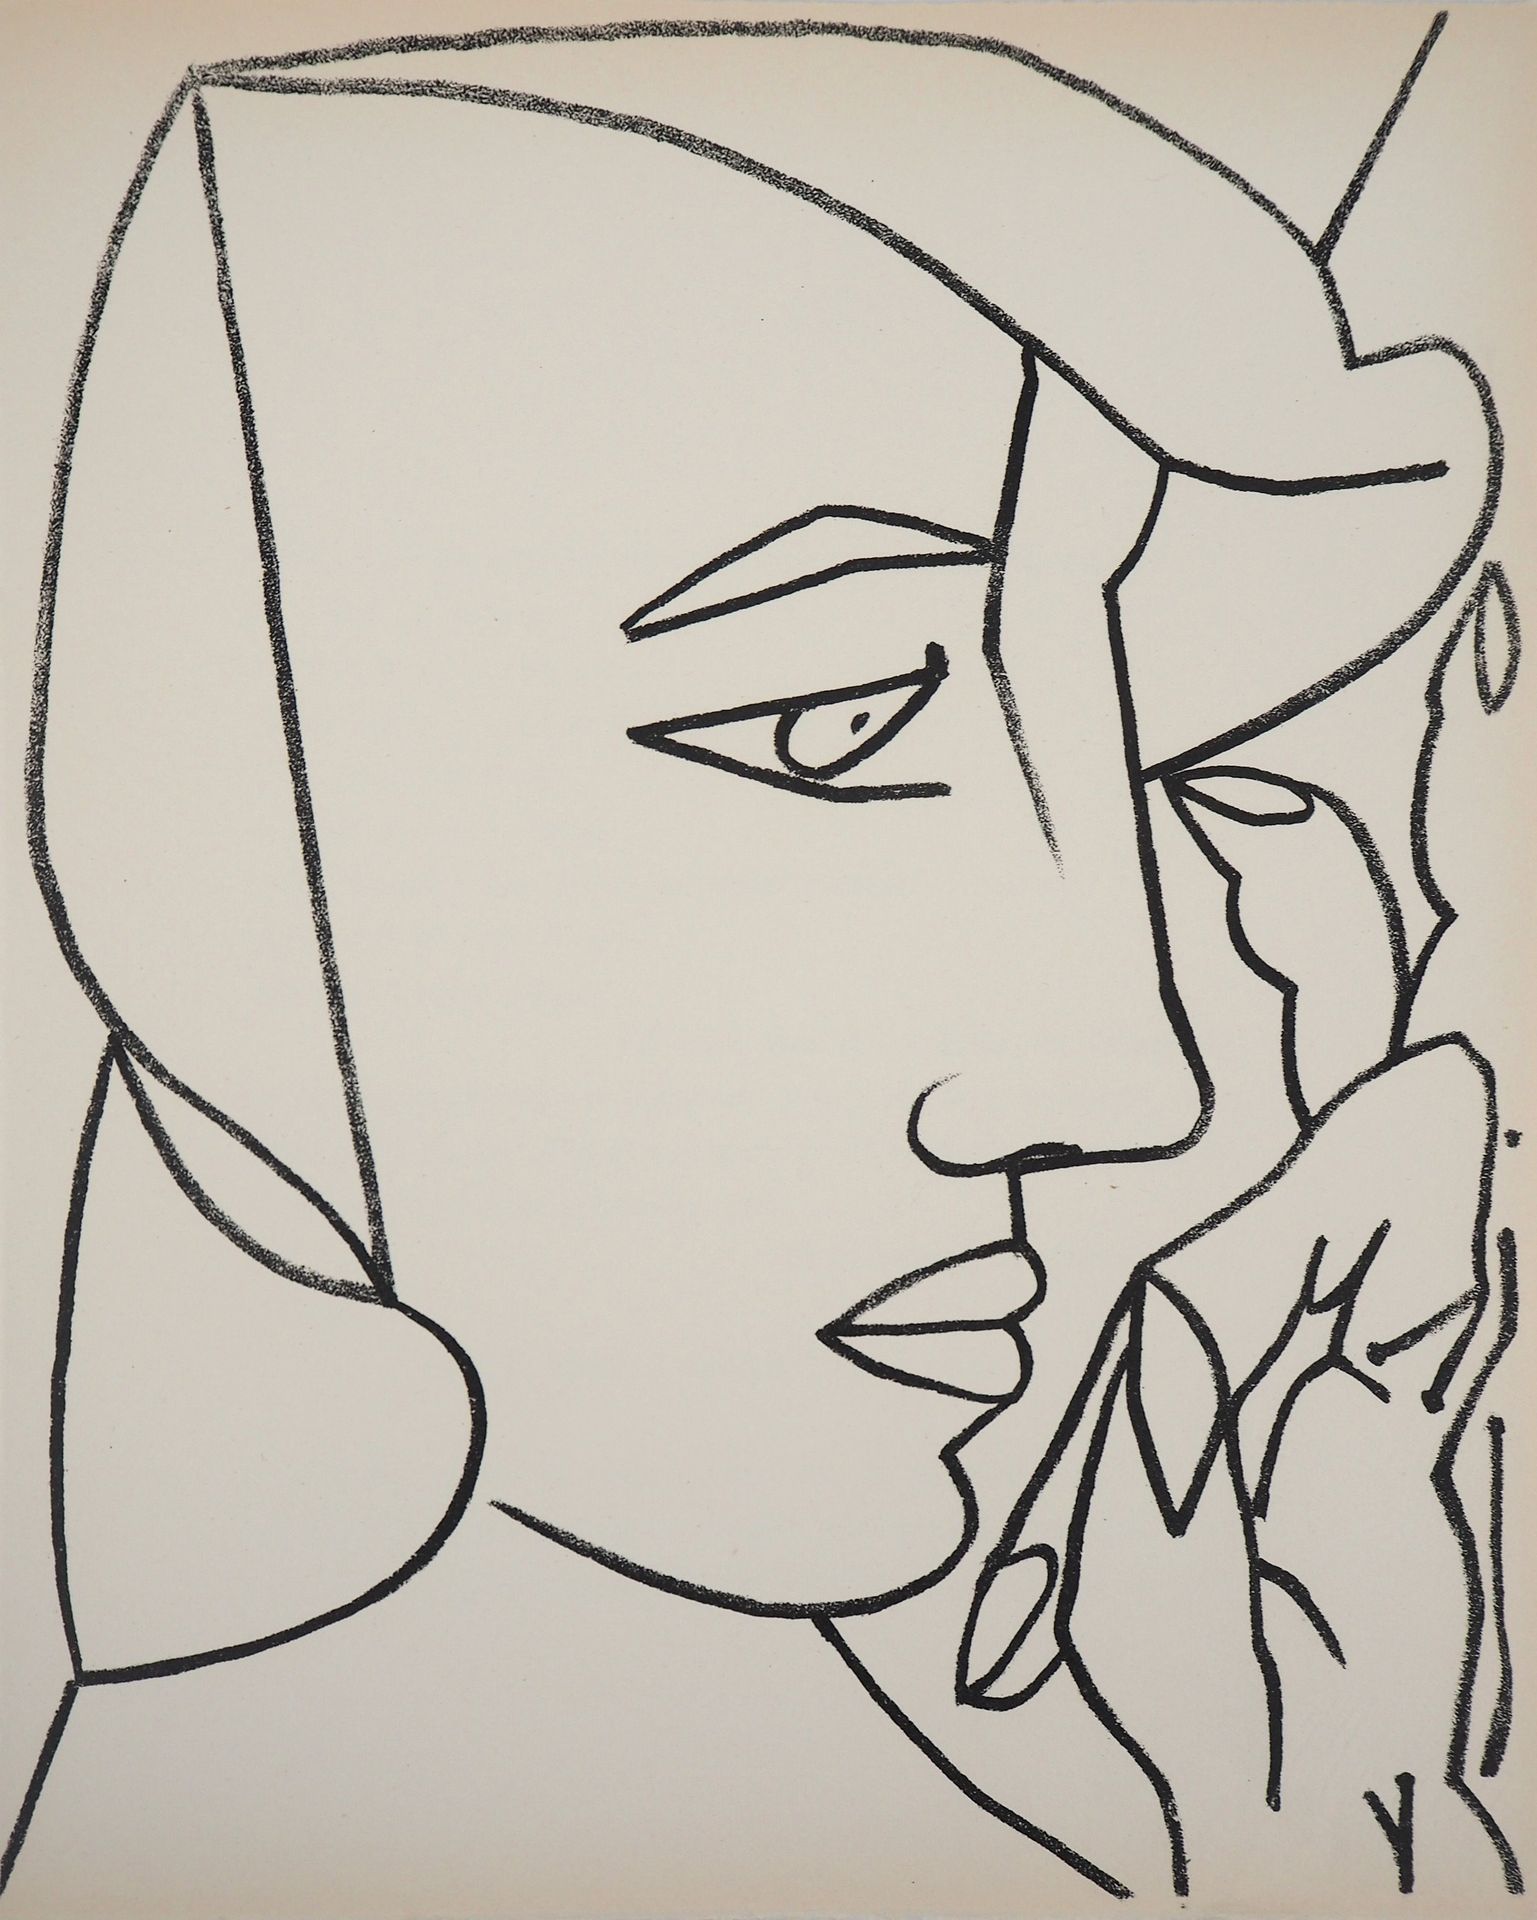 FRANÇOISE GILOT 弗朗索瓦丝-吉洛特 (1921)

女人的轮廓，1951年

原始石版画

马莱梭织纸上 28 x 22.5 cm

印刷了36&hellip;